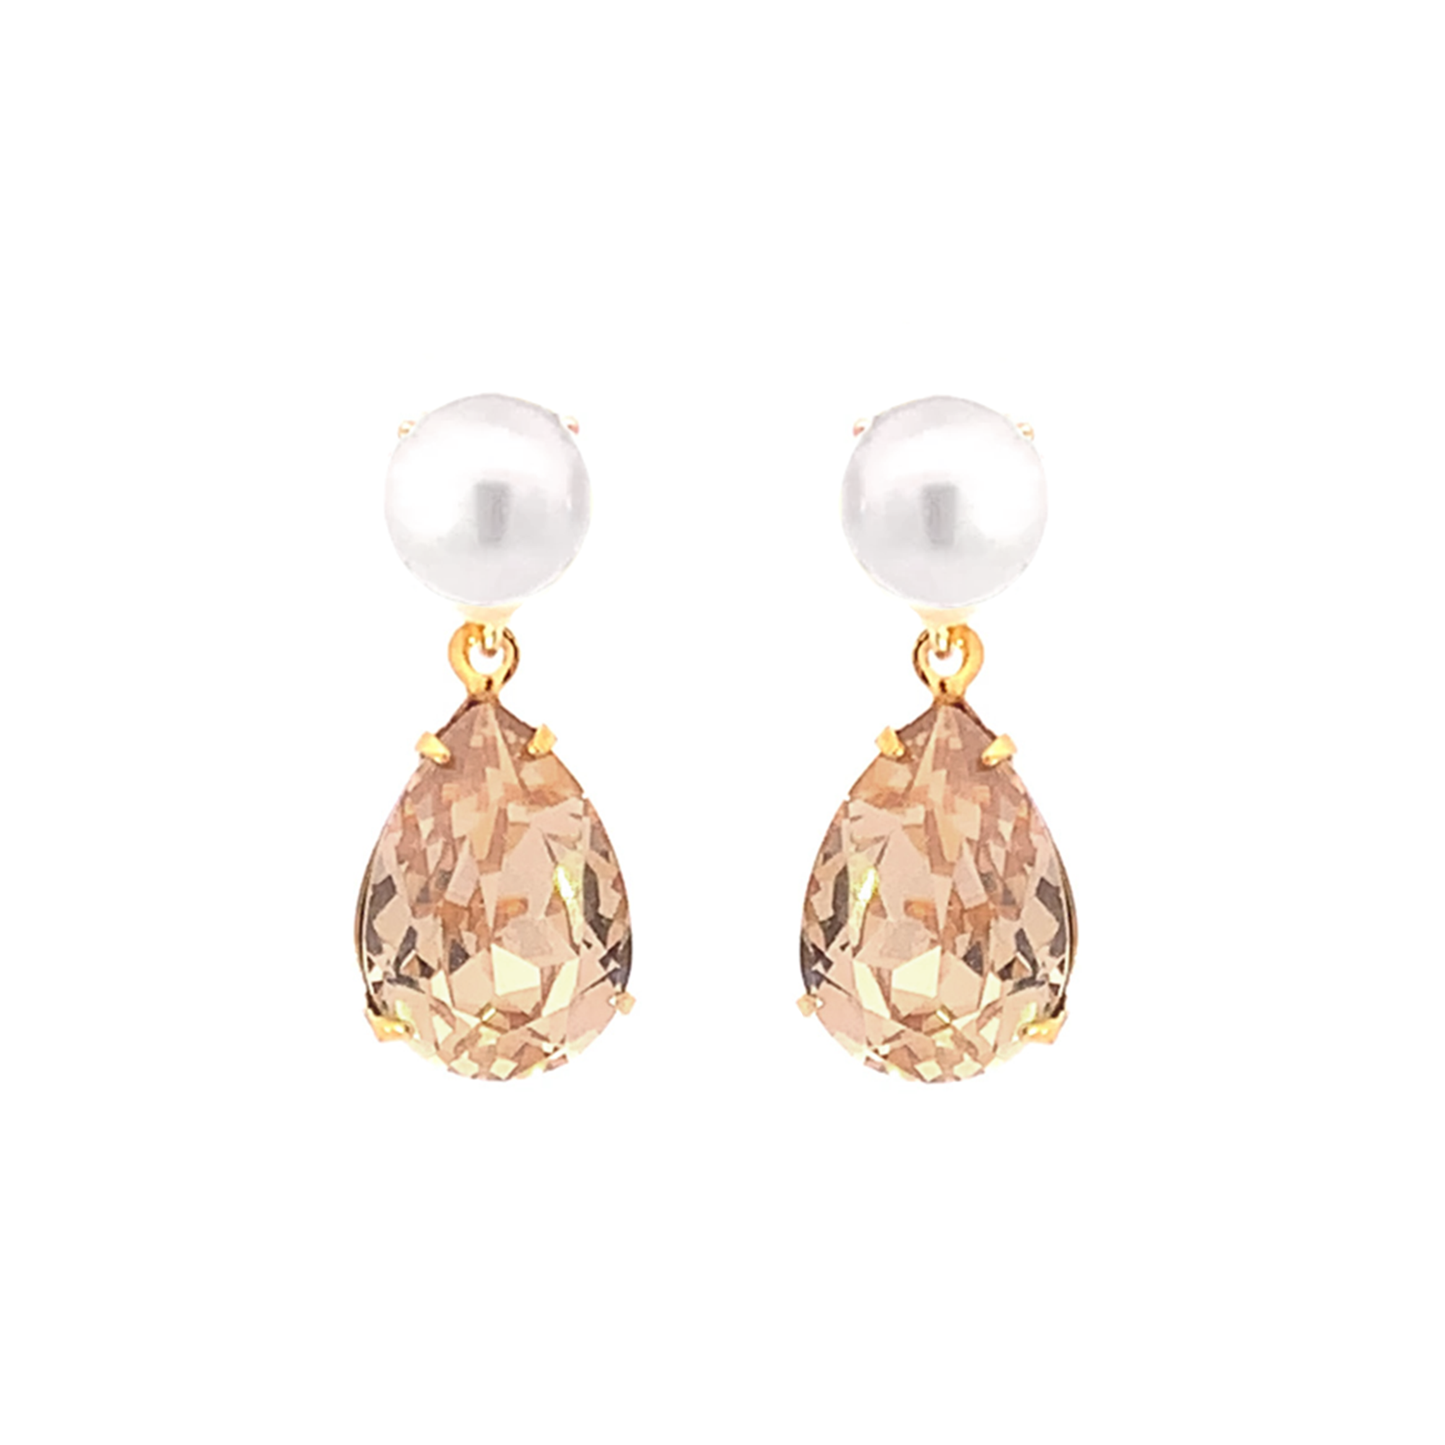 November birthstone pearl earrings gold